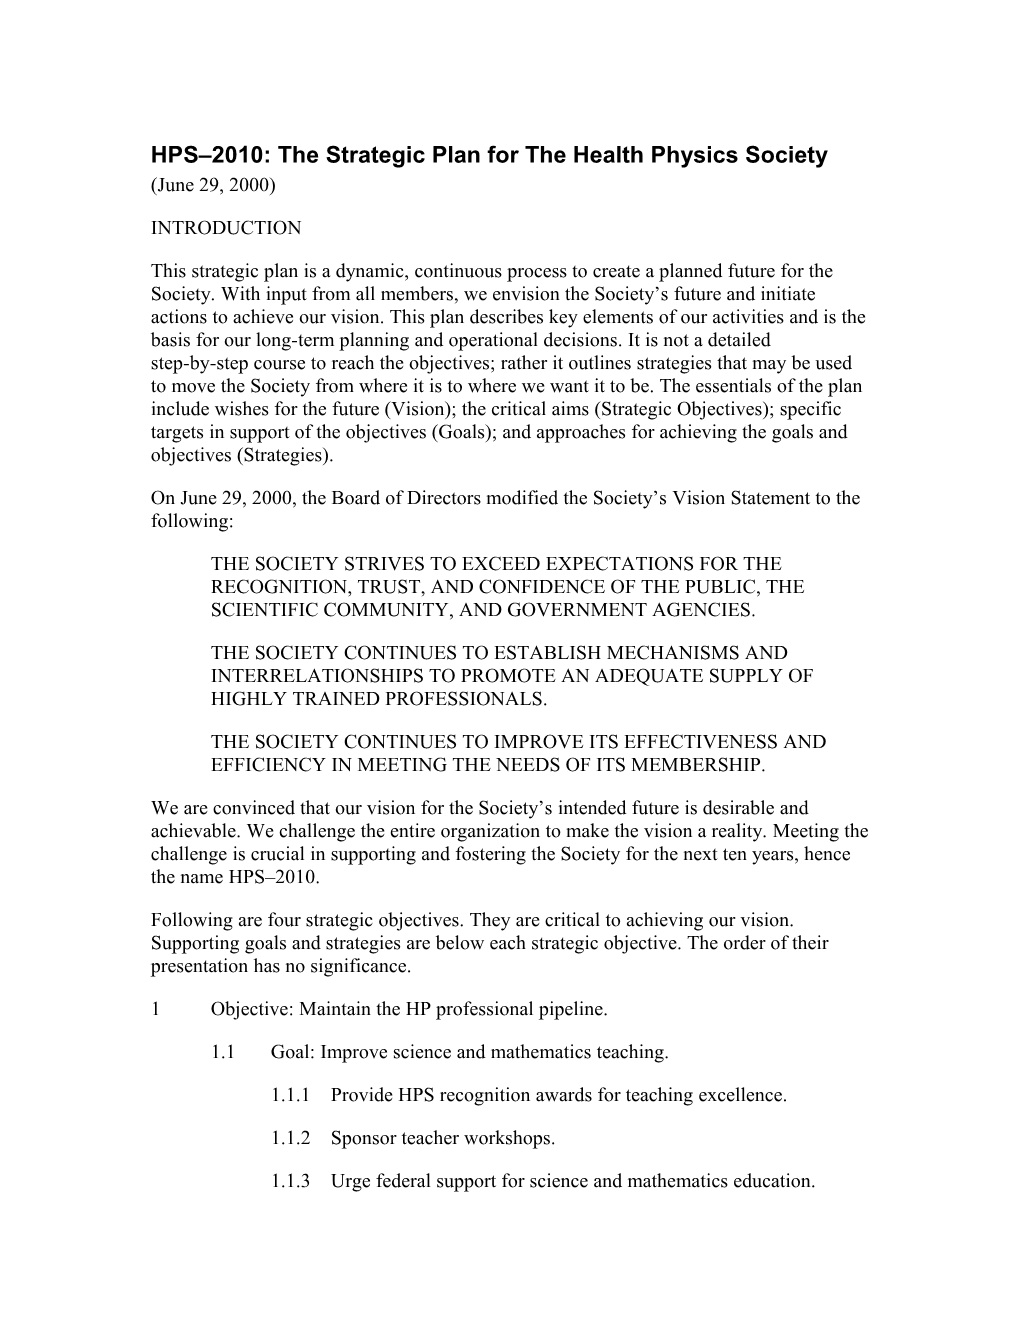 HPS-2000 the Strategic Plan for the Health Physics Society